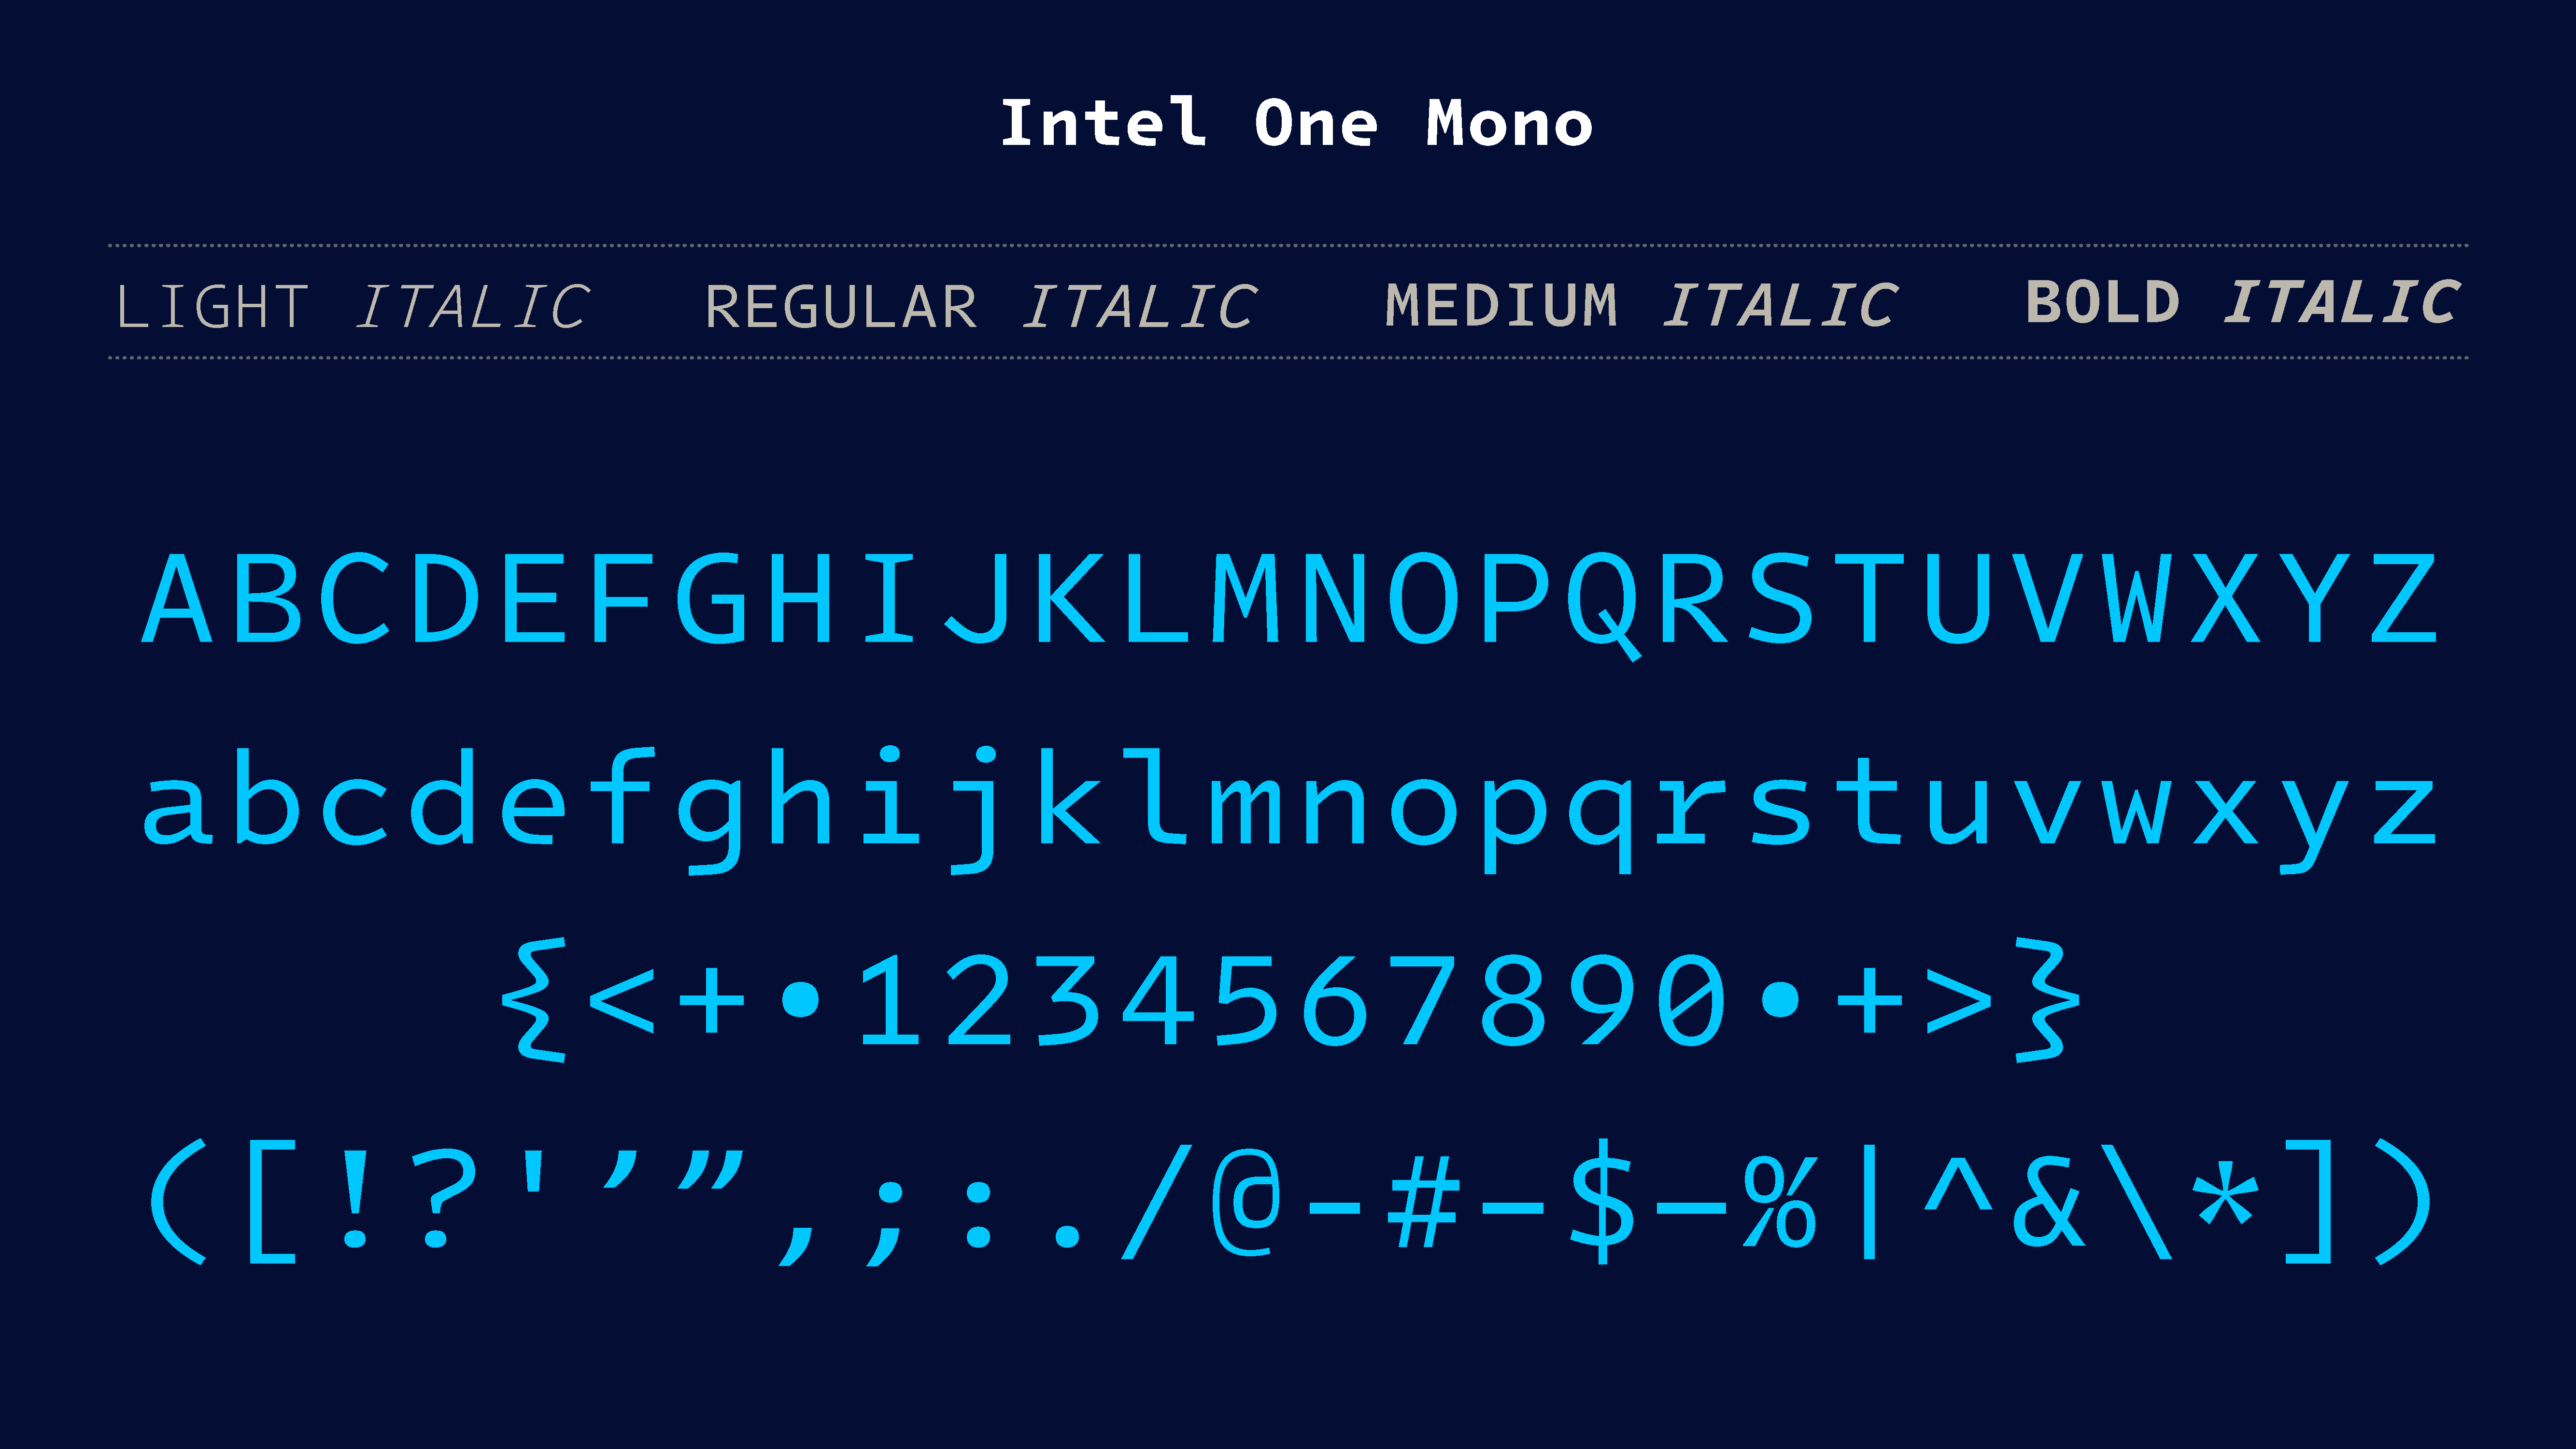 Image of Intel One Mono character set